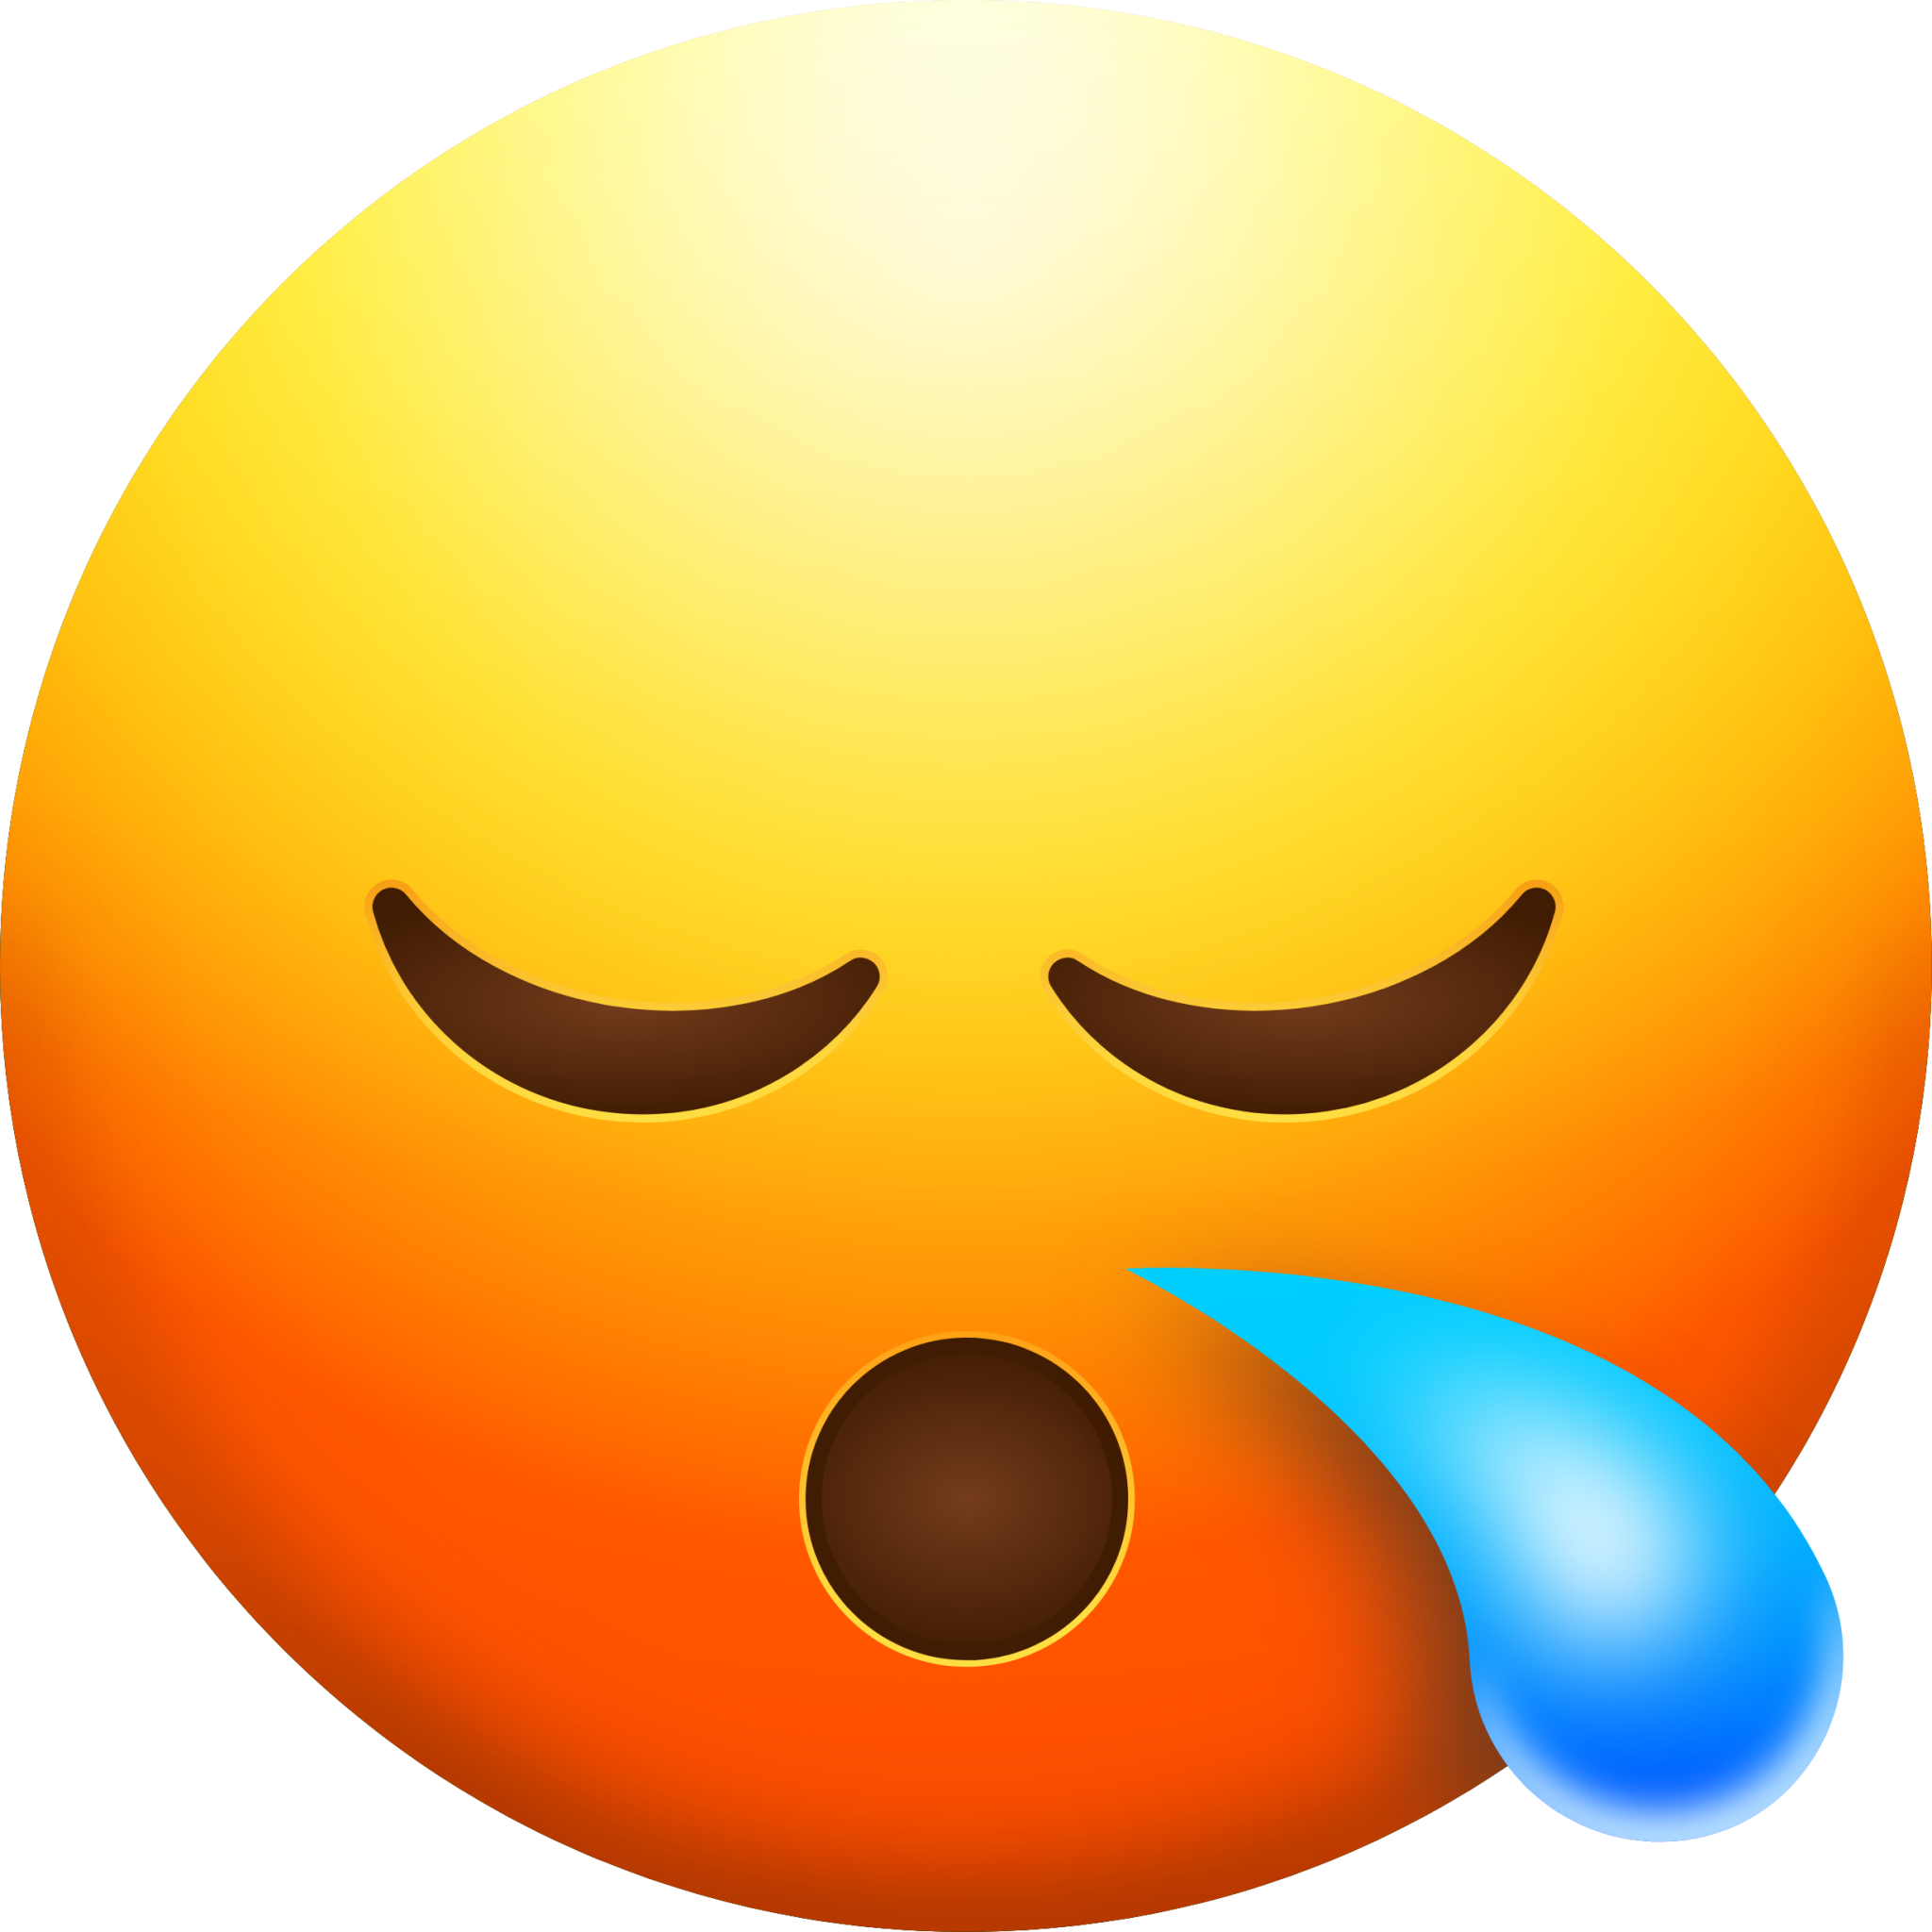 Sleepy Face emoji